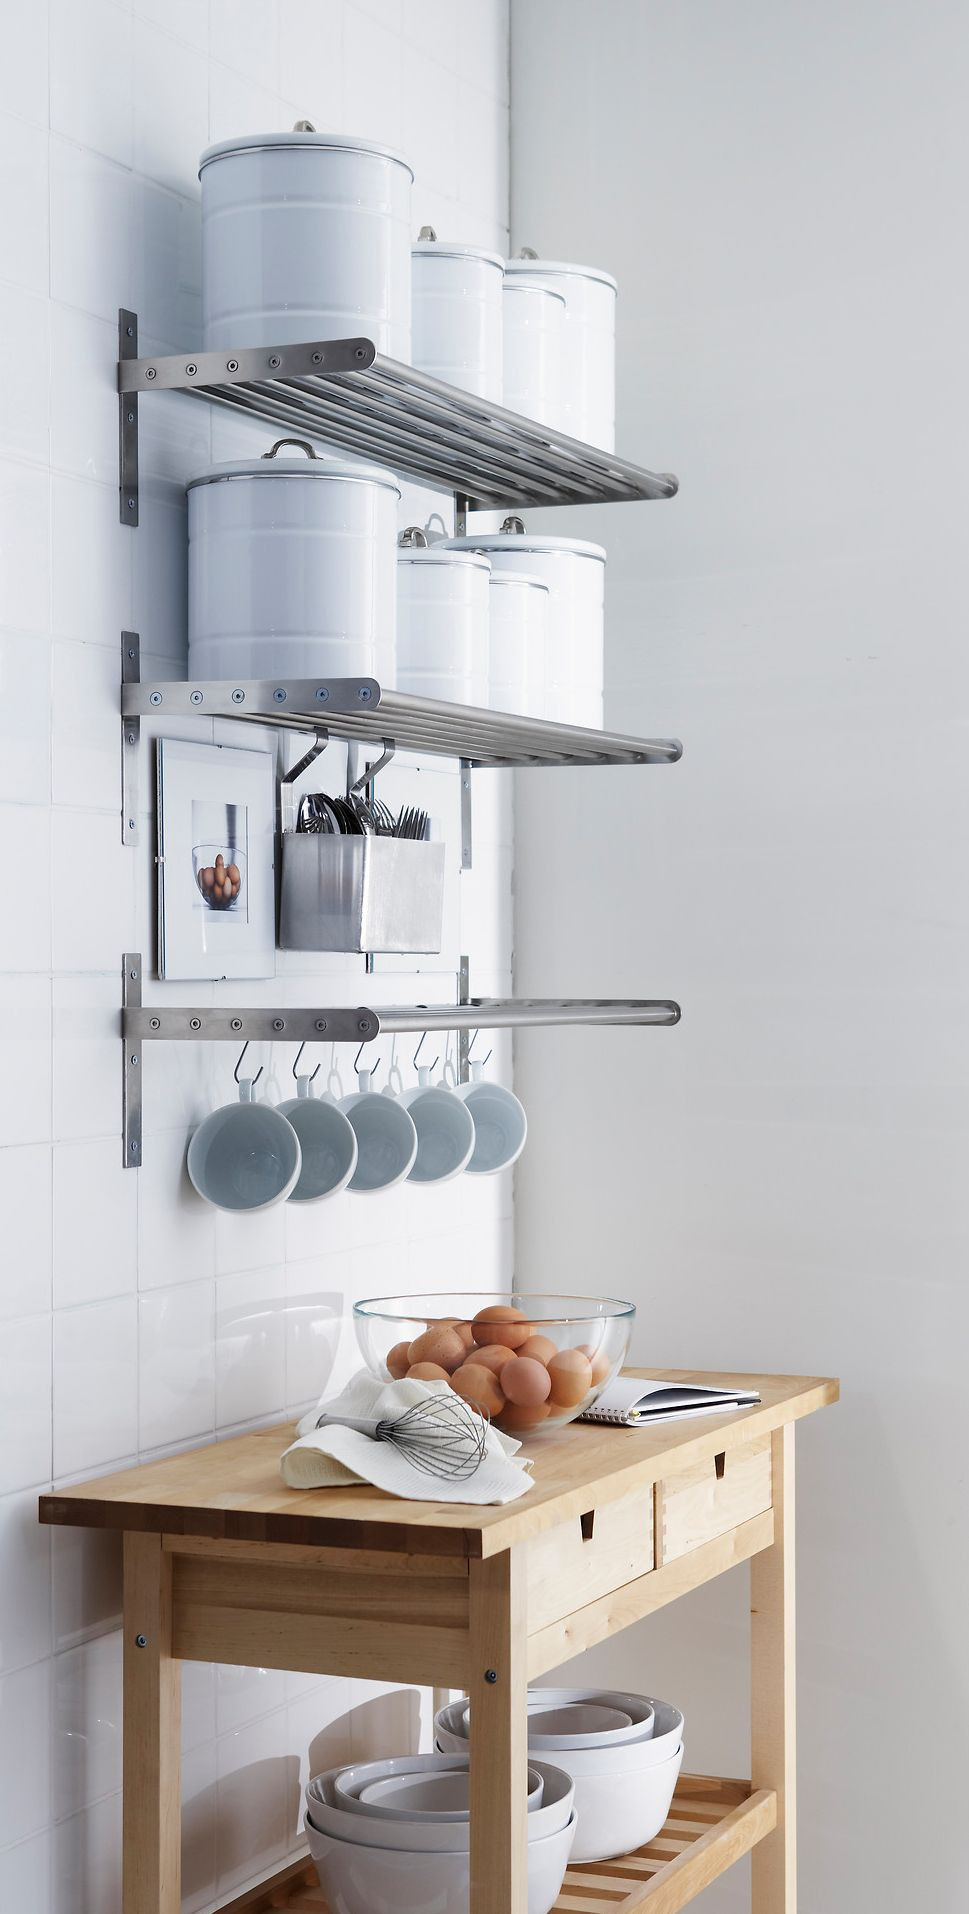 Ikea Kitchen Wall Shelves
 65 Ingenious Kitchen Organization Tips And Storage Ideas